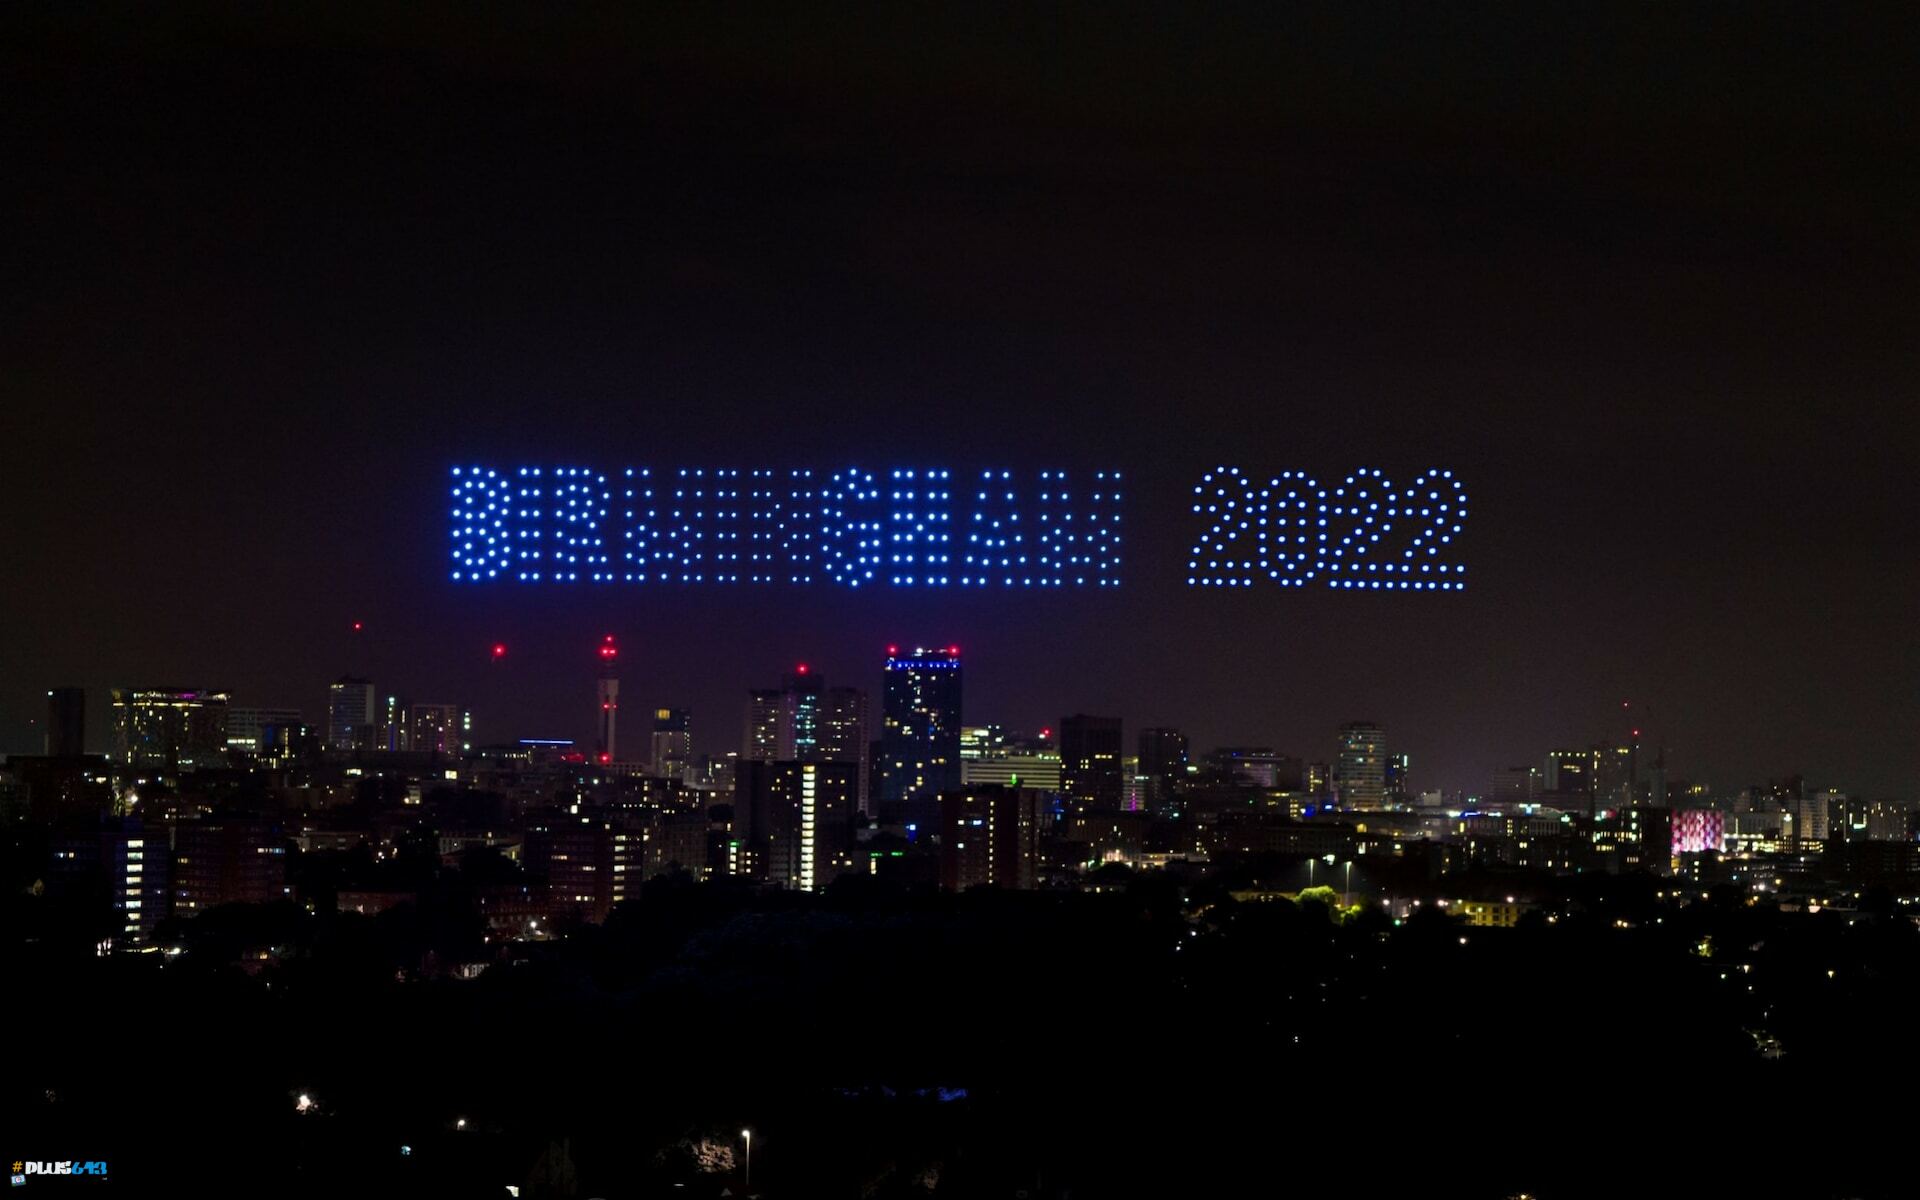 300 Software Run Drones, Birmingham, Before 2022 Commonwealth Games